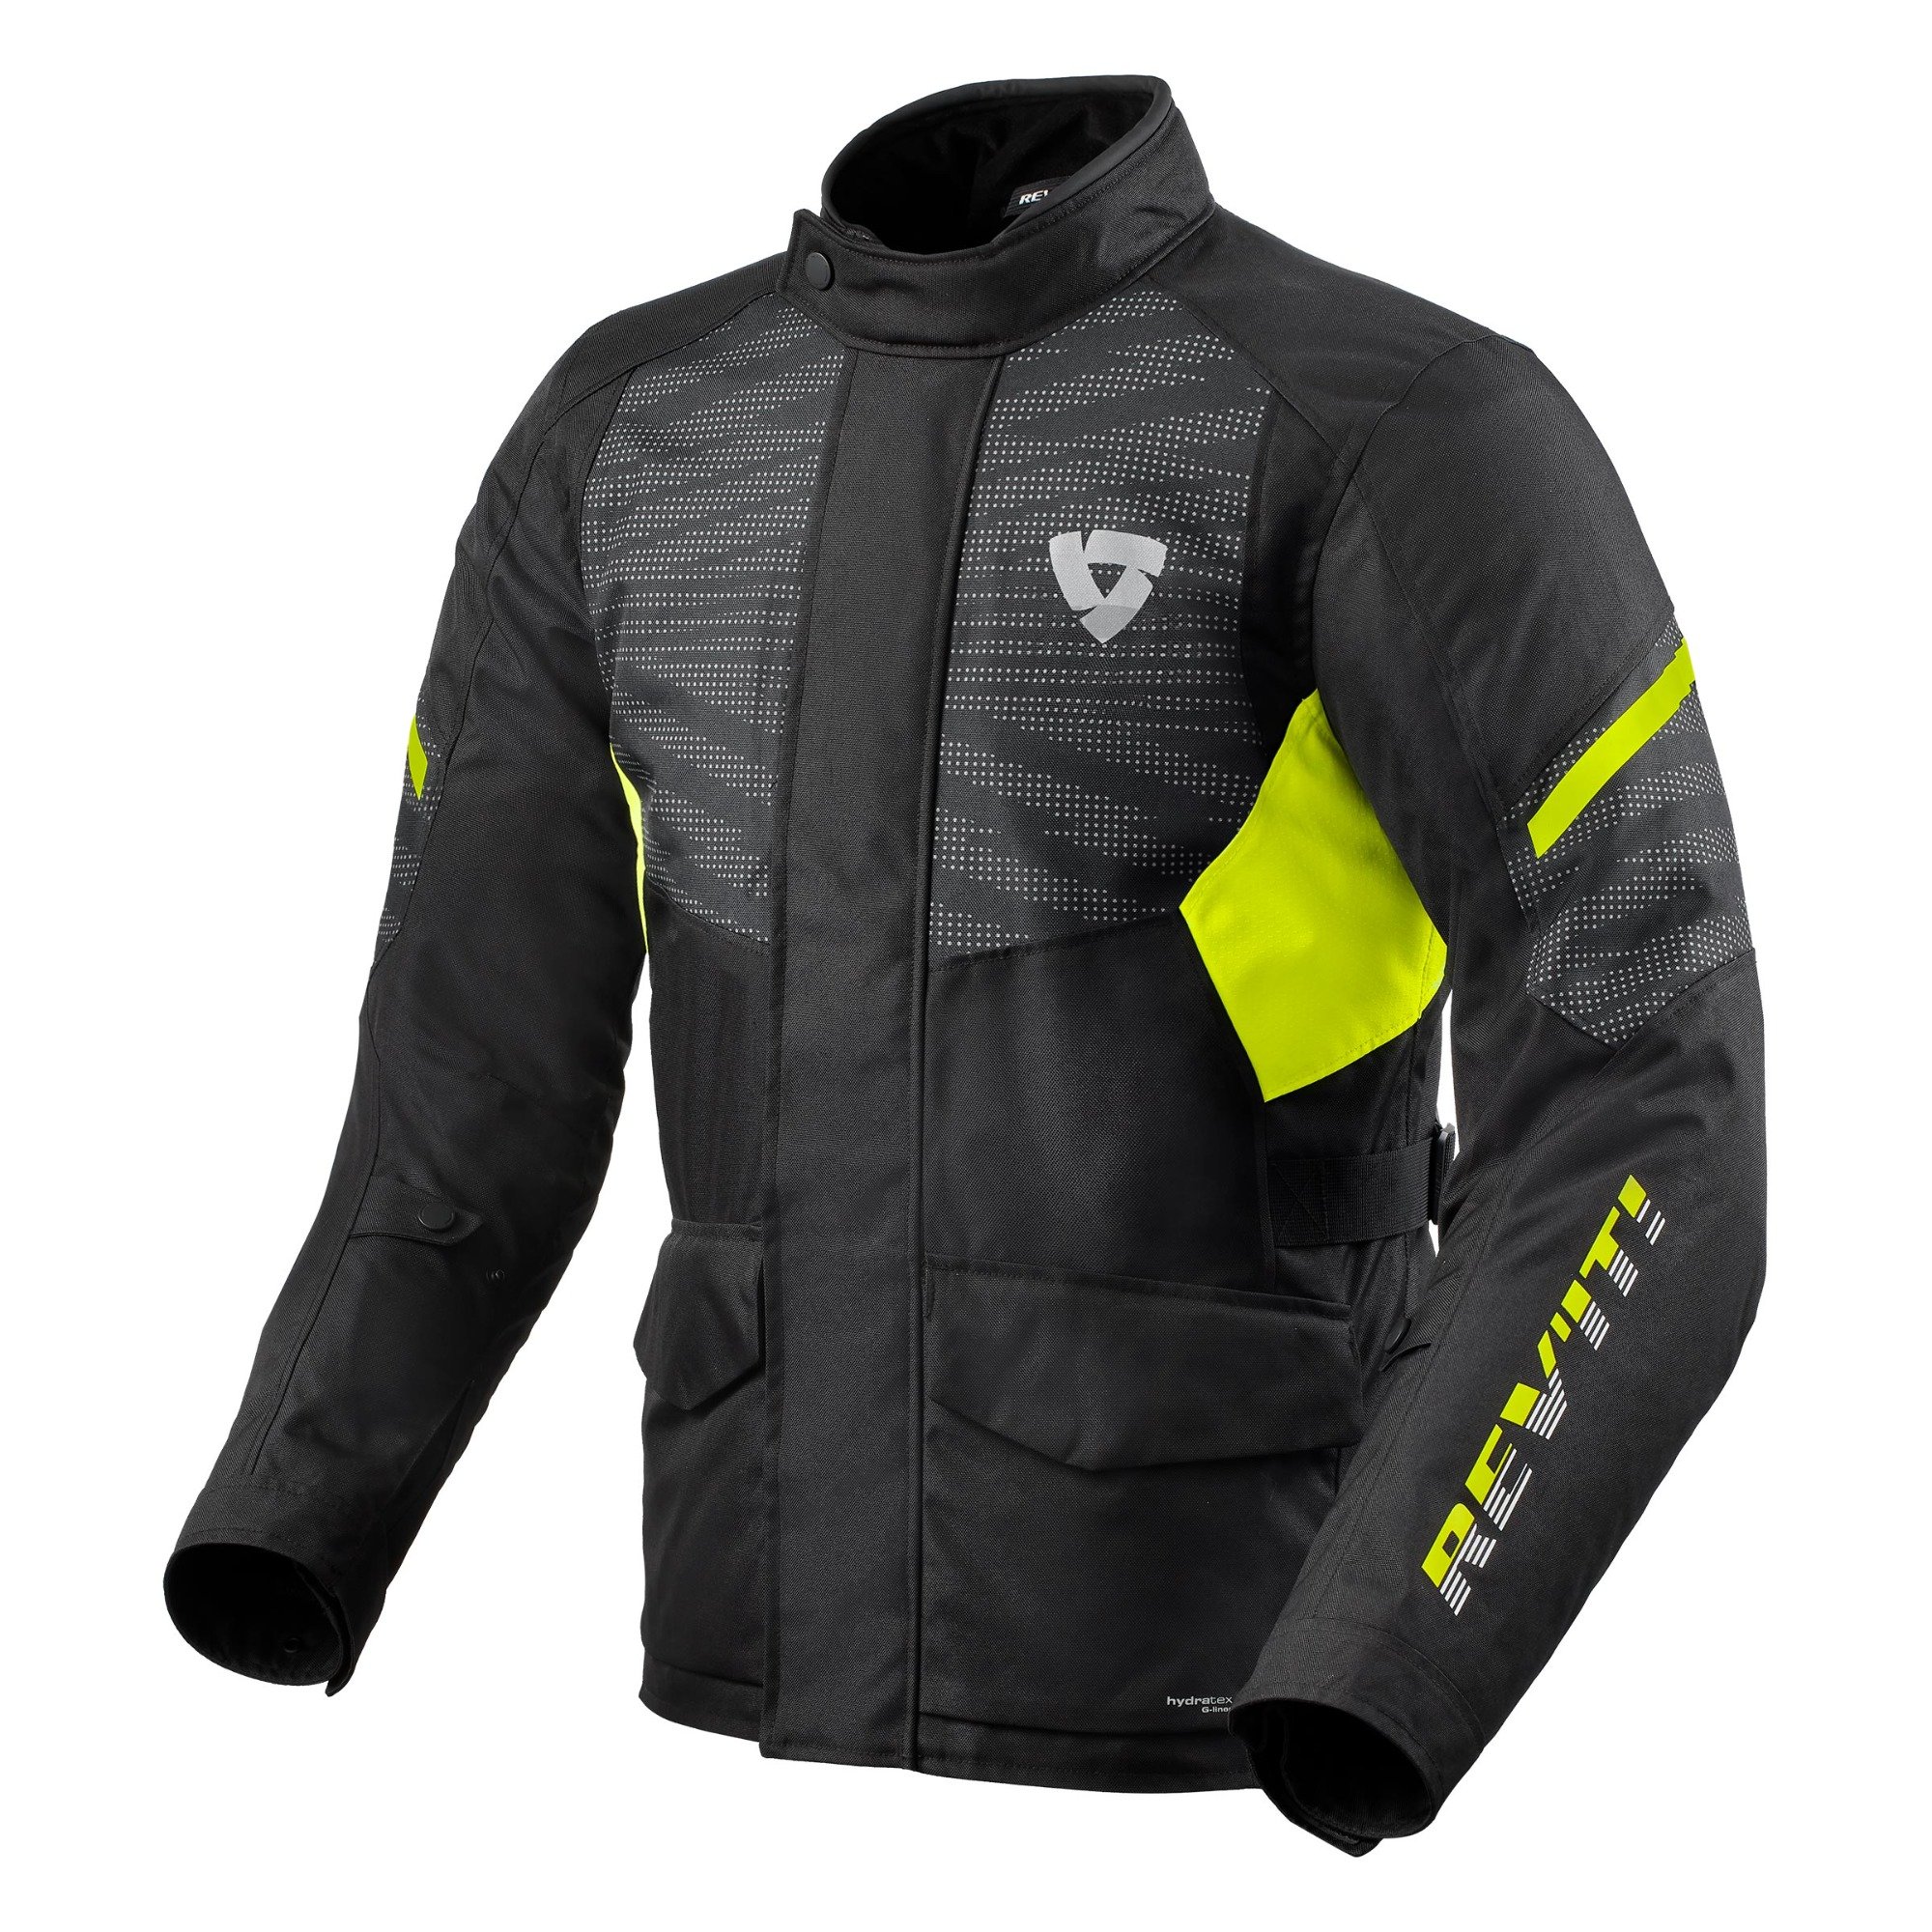 Image of REV'IT! Duke H2O Jacket Black Neon Yellow Size S EN